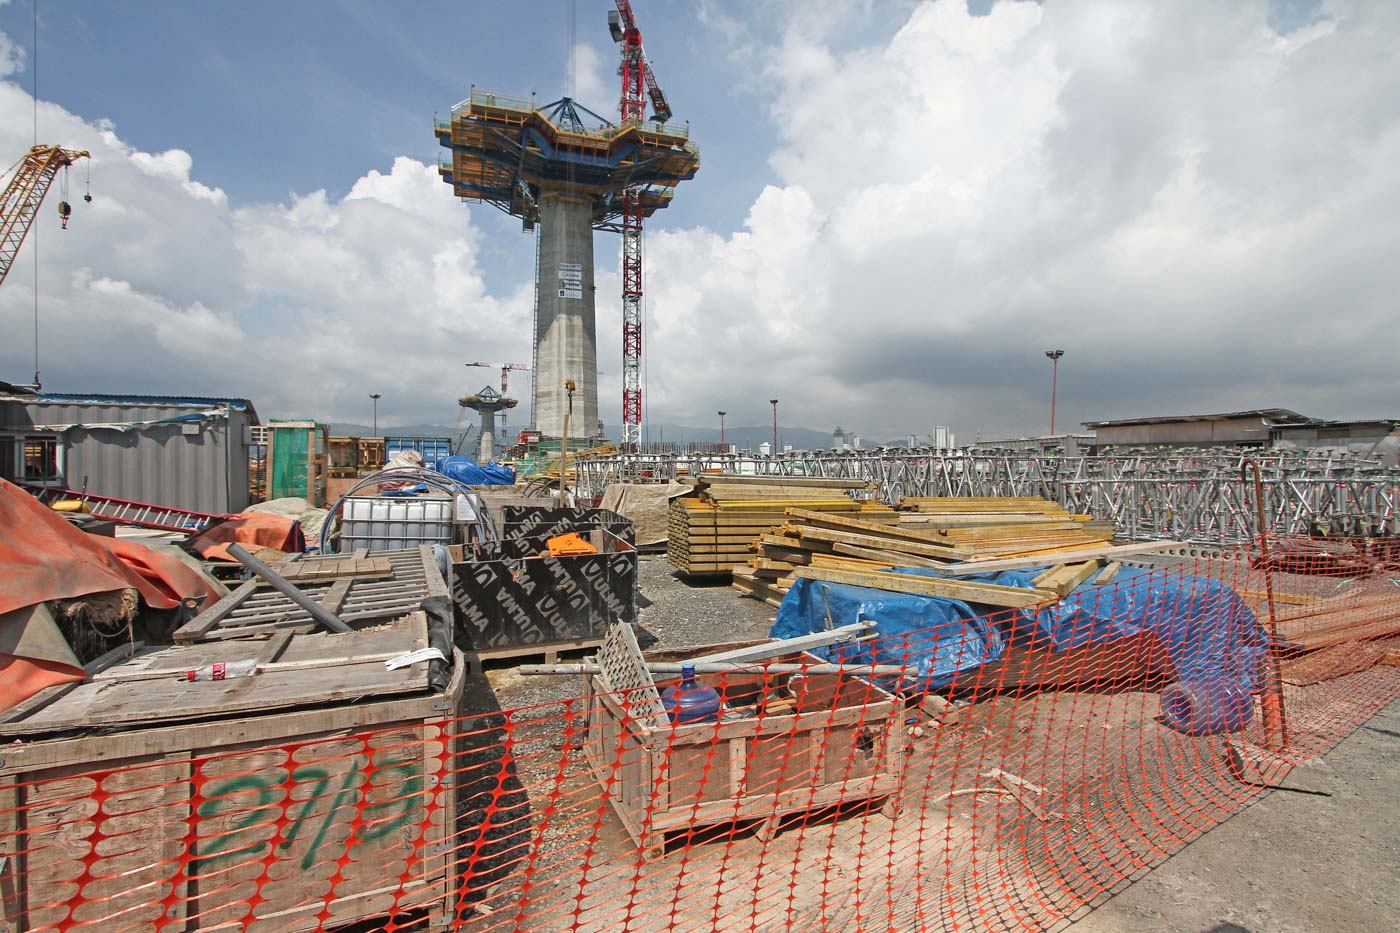 HALFWAY. Construction is in full swing at the Cebu Cordova Link Expressway. Photo by Gelo Litonjua/Rappler 